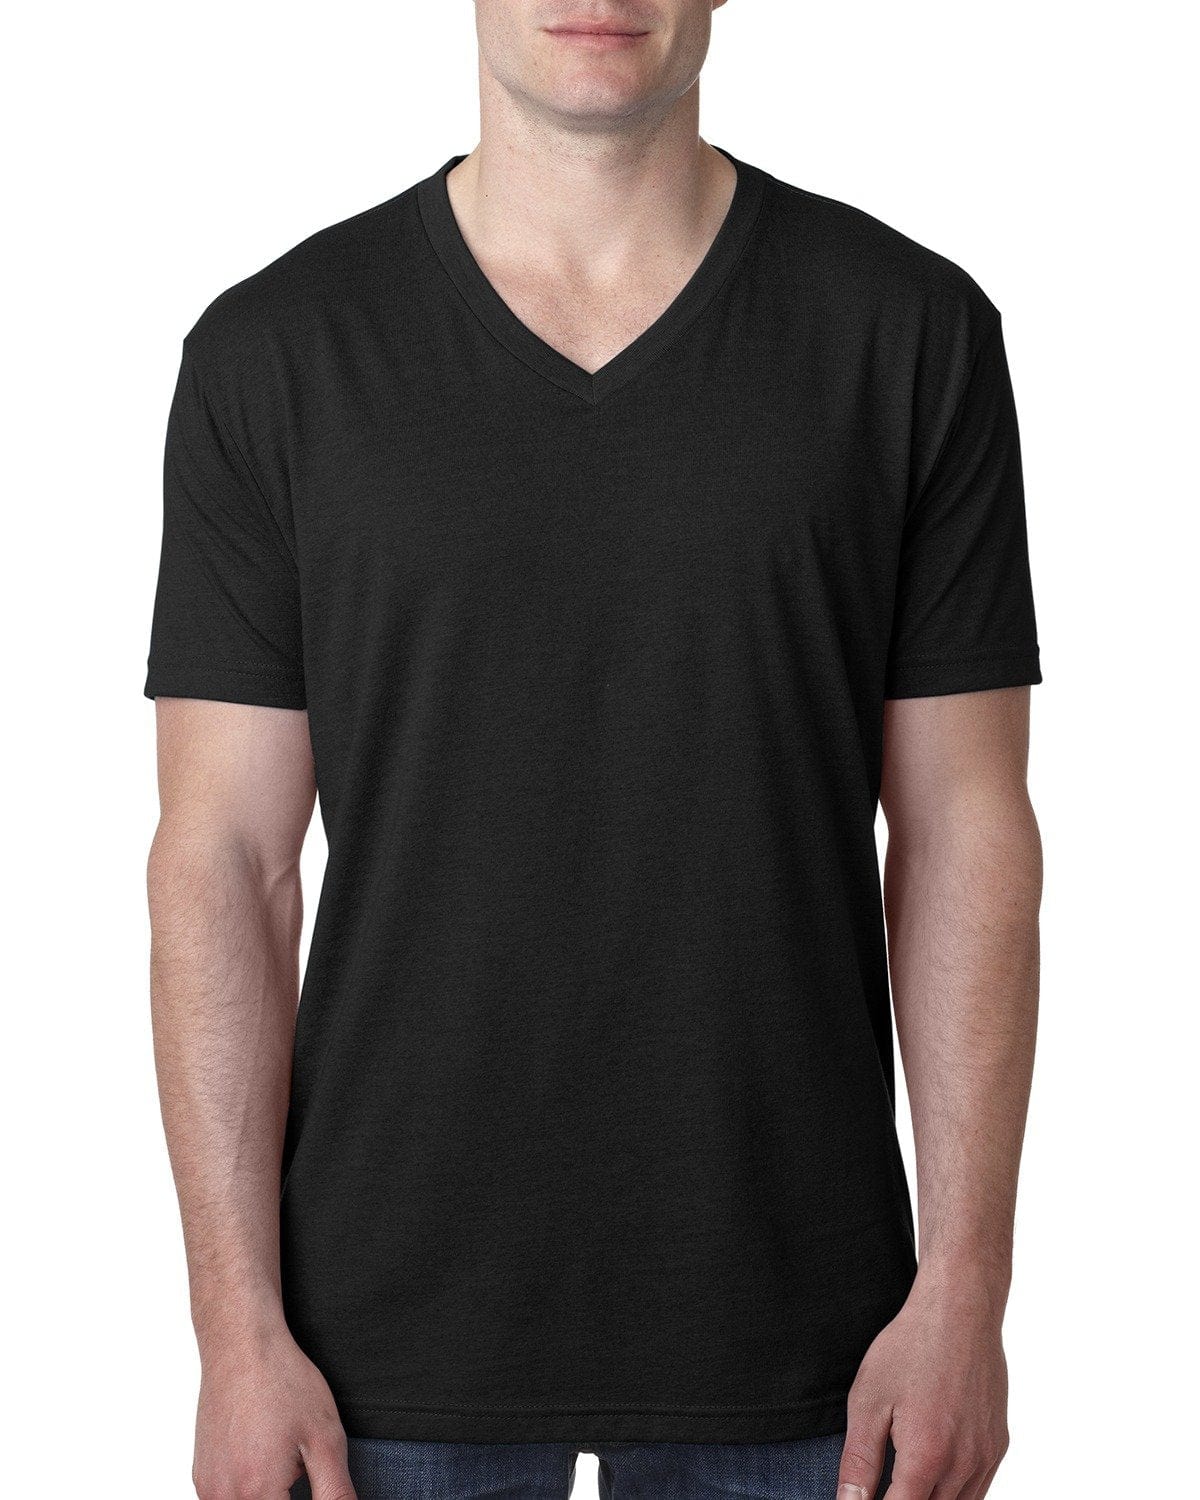 Black V-Neck T-Shirt For Men Fresh Clean Tees, 48% OFF